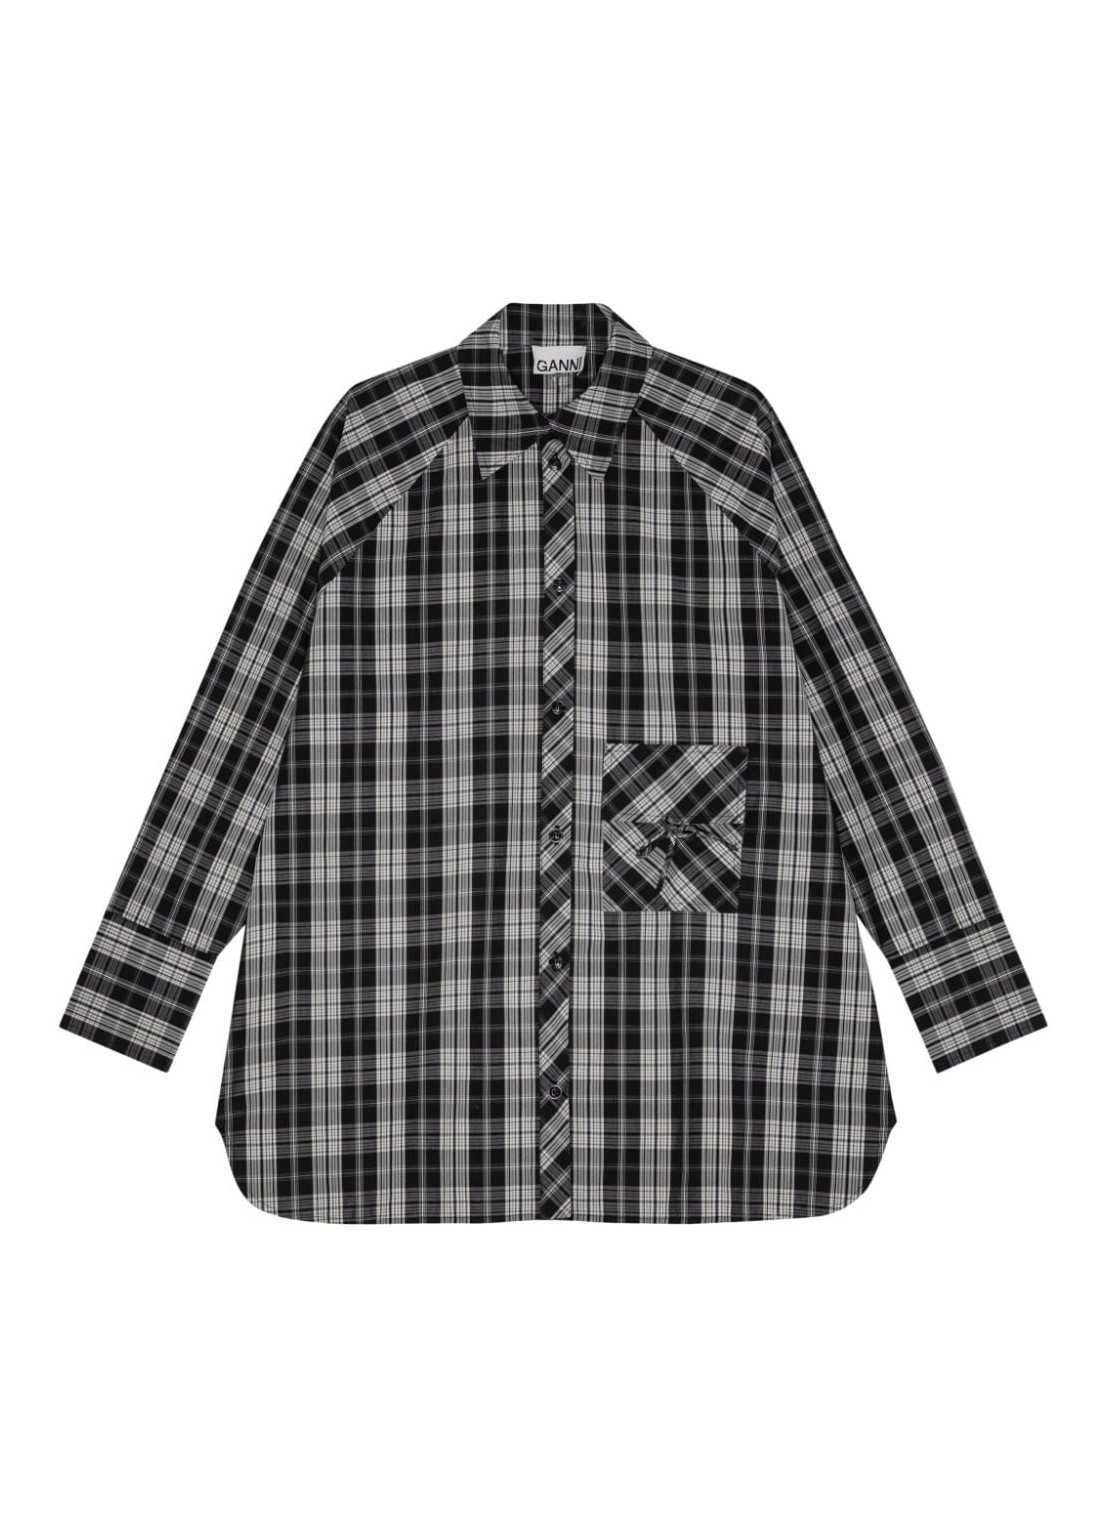 Camiseria ganni shirt woman check cotton oversize raglan shirt f9070 099 talla negro
 